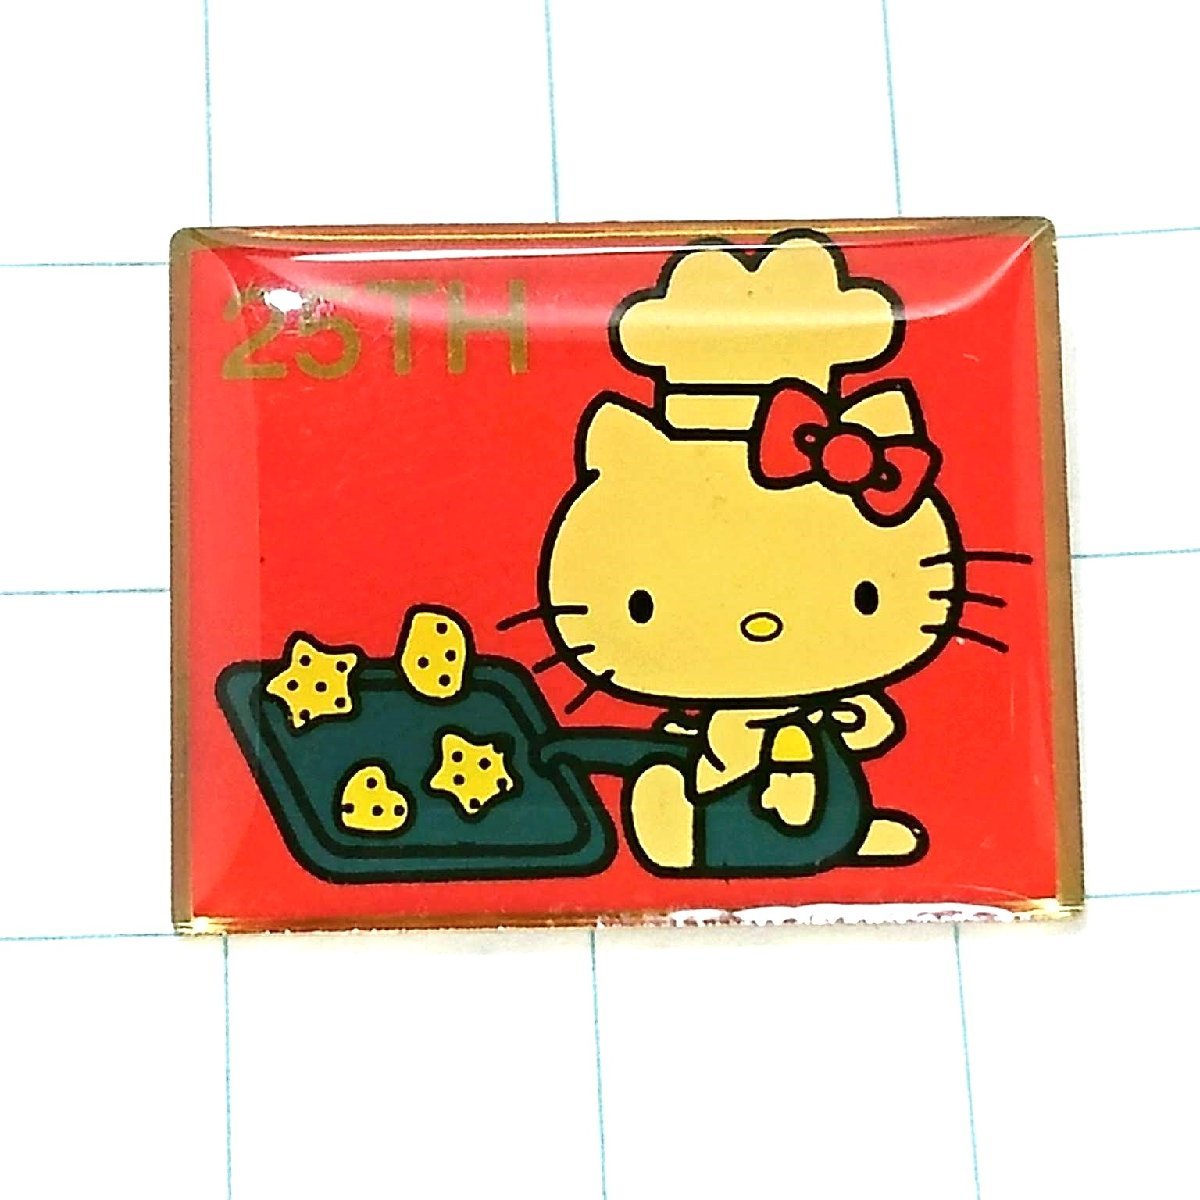  free shipping ) Hello Kitty 25 anniversary strawberry newspaper ... character PINS pin z pin badge A16748